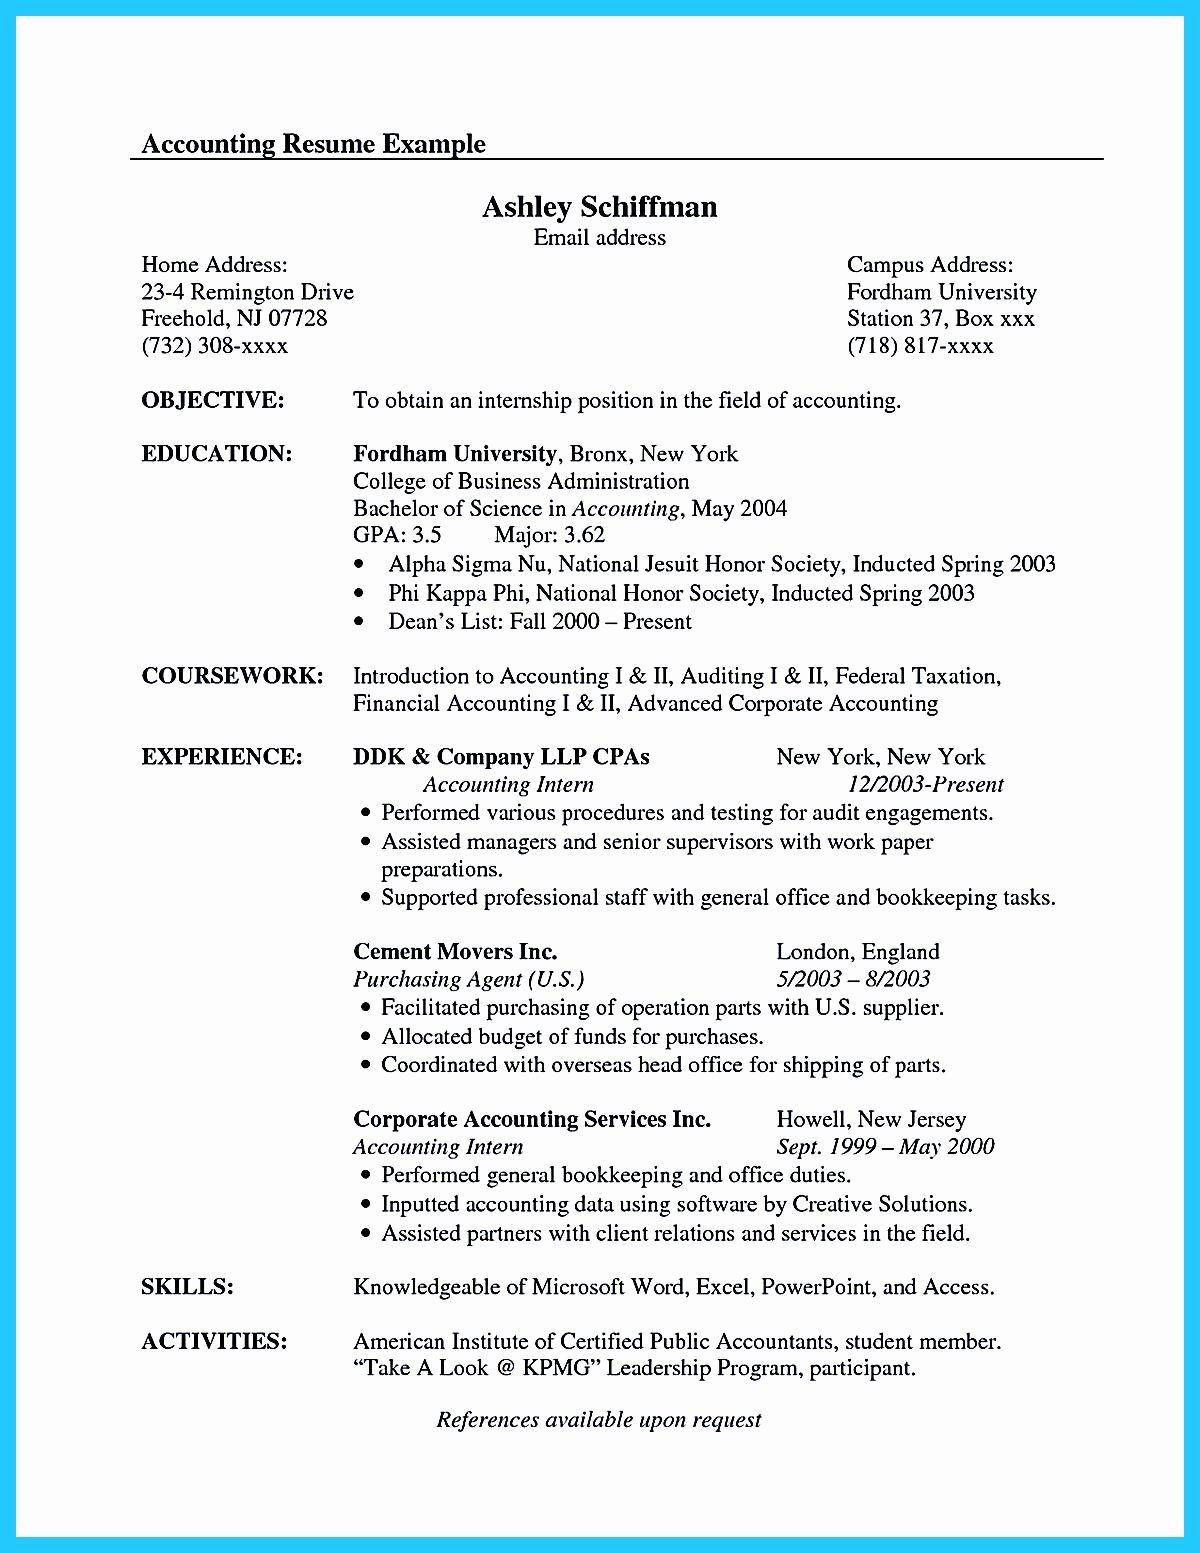 Sample Resume Of Finance Accounting Graduate Accounting Graduate Resume No Experienceâ¢ Printable Resume …